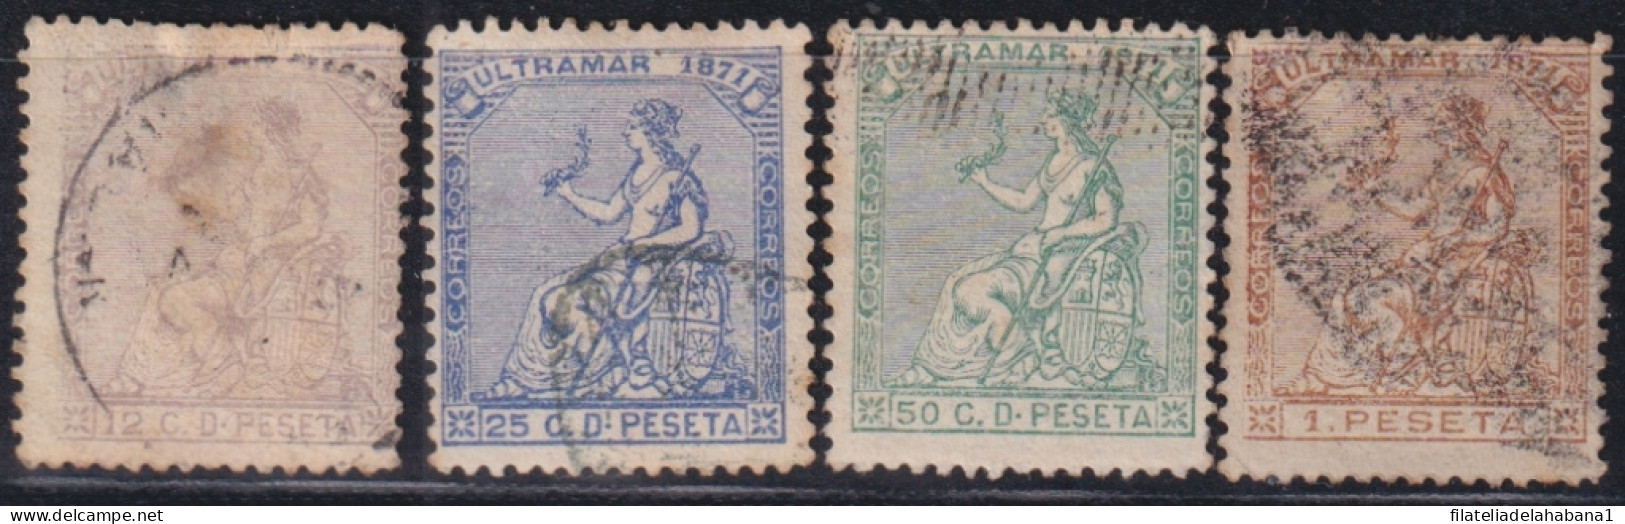 1871-136 CUBA ANTILLES SPAIN 1871 COMPLETE SET USED.  - Prephilately